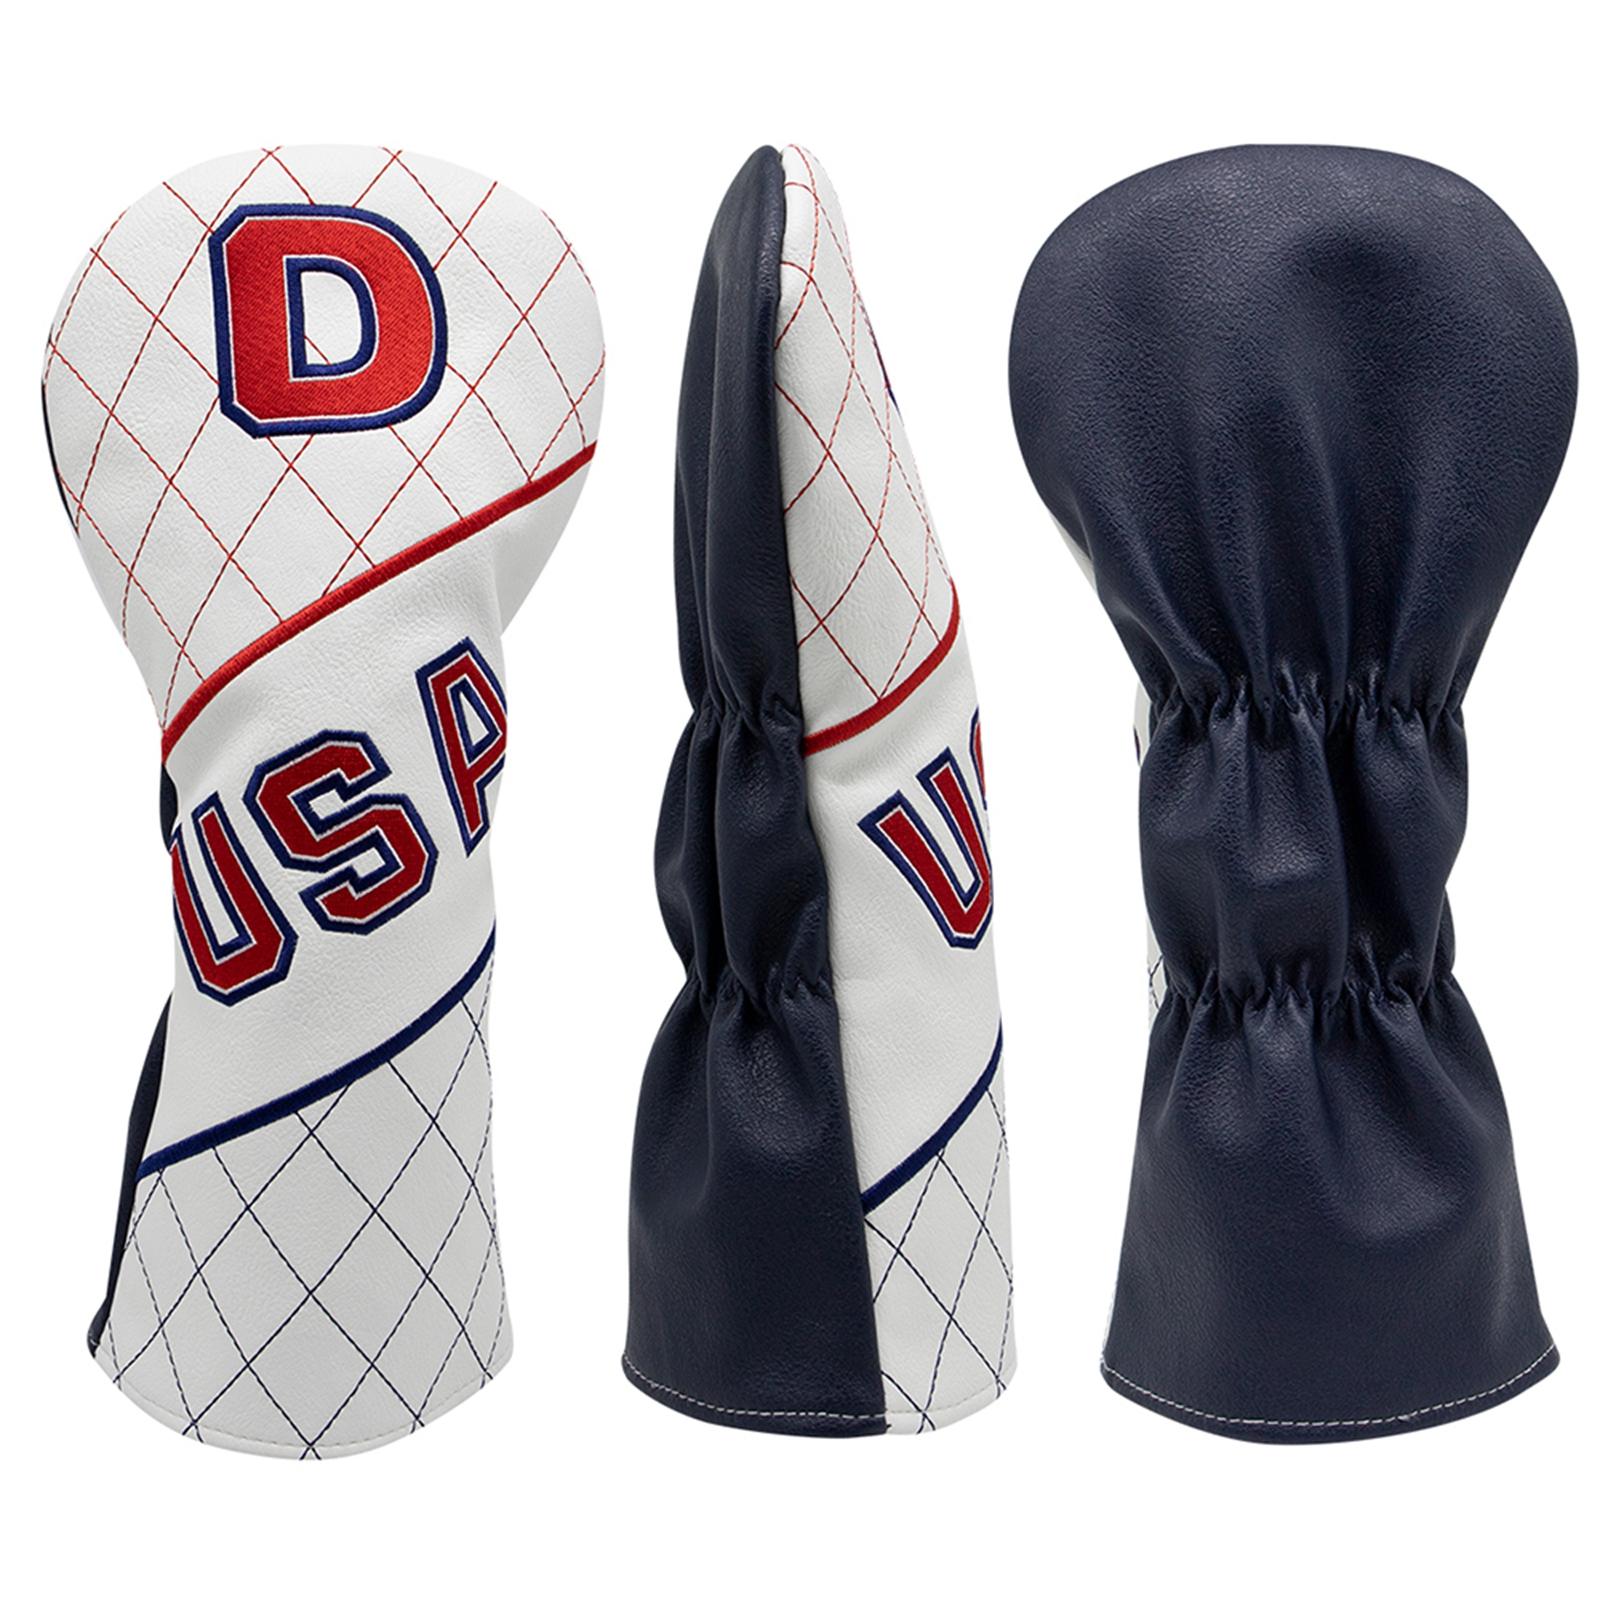 Club Head Covers USA Fashion Premium Lightweight for Sports Travel Men Women D W H Set 